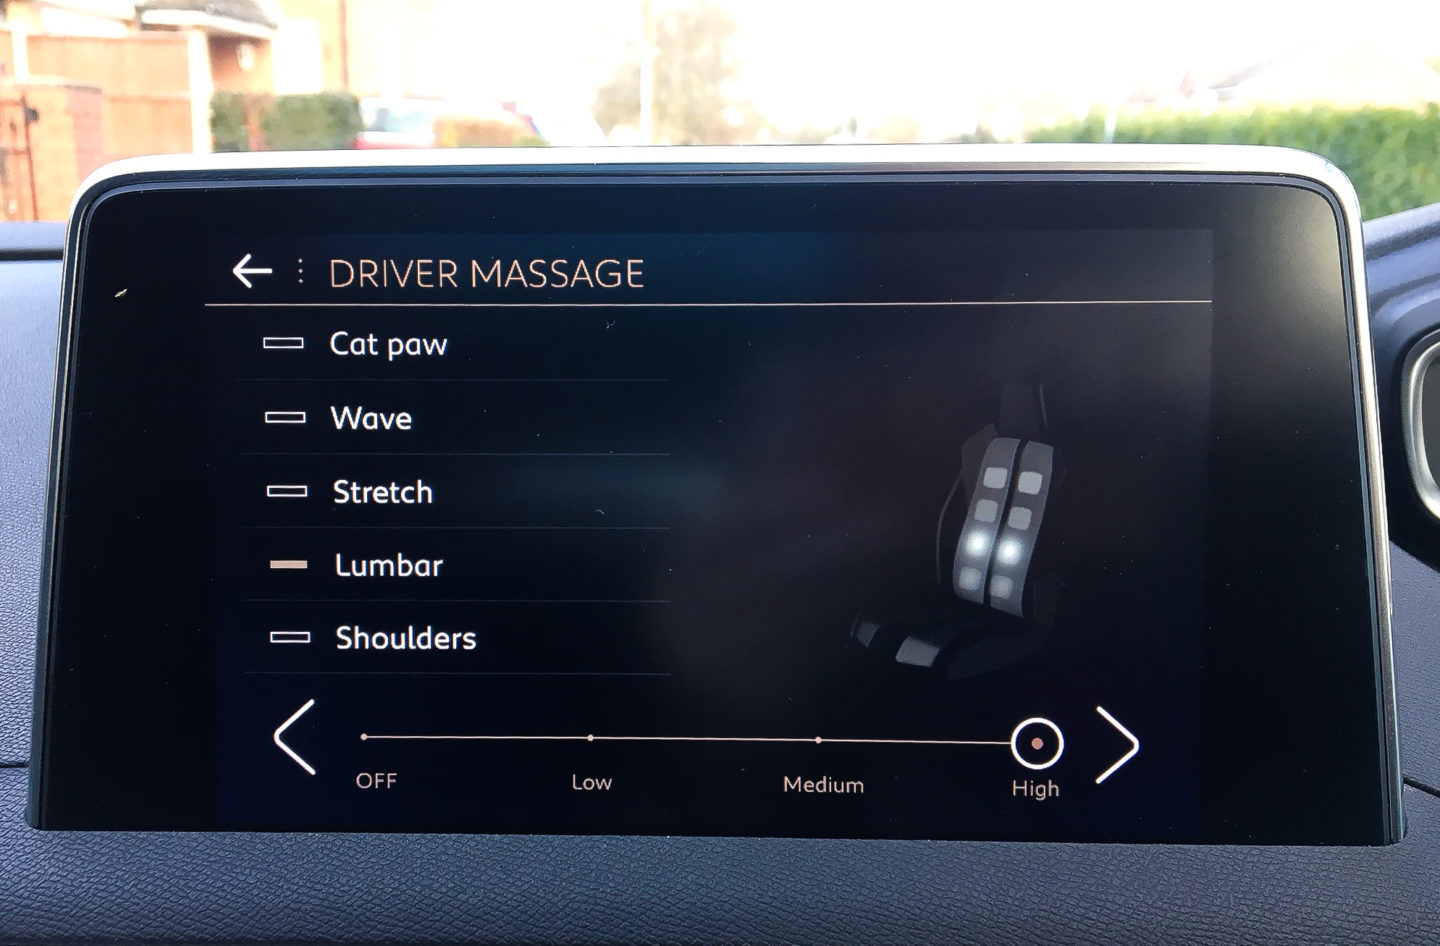 Peugeot 5008 driver massage options